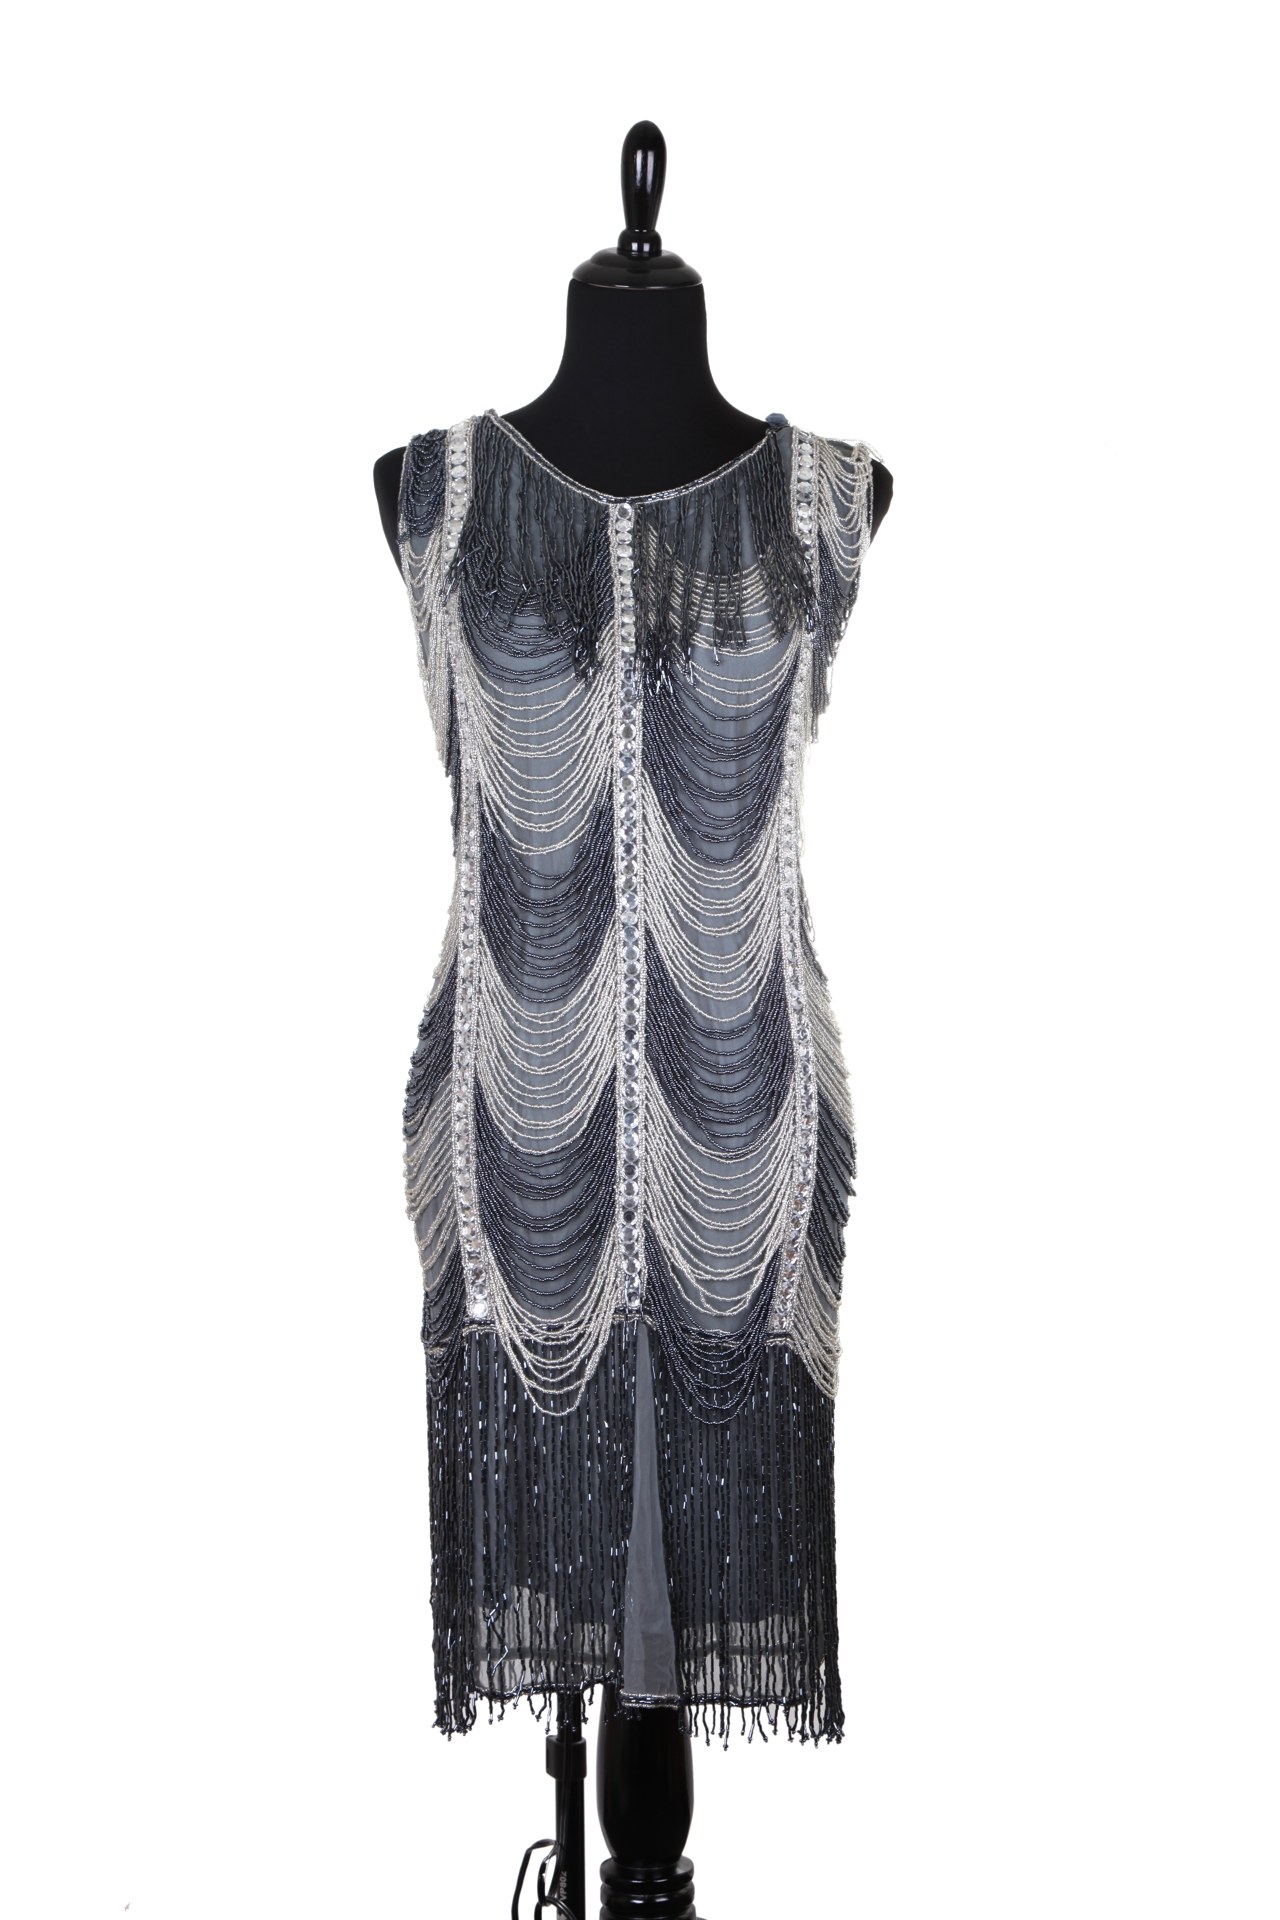 Stylish Grey and Silver Fringe Flapper Costume Dress